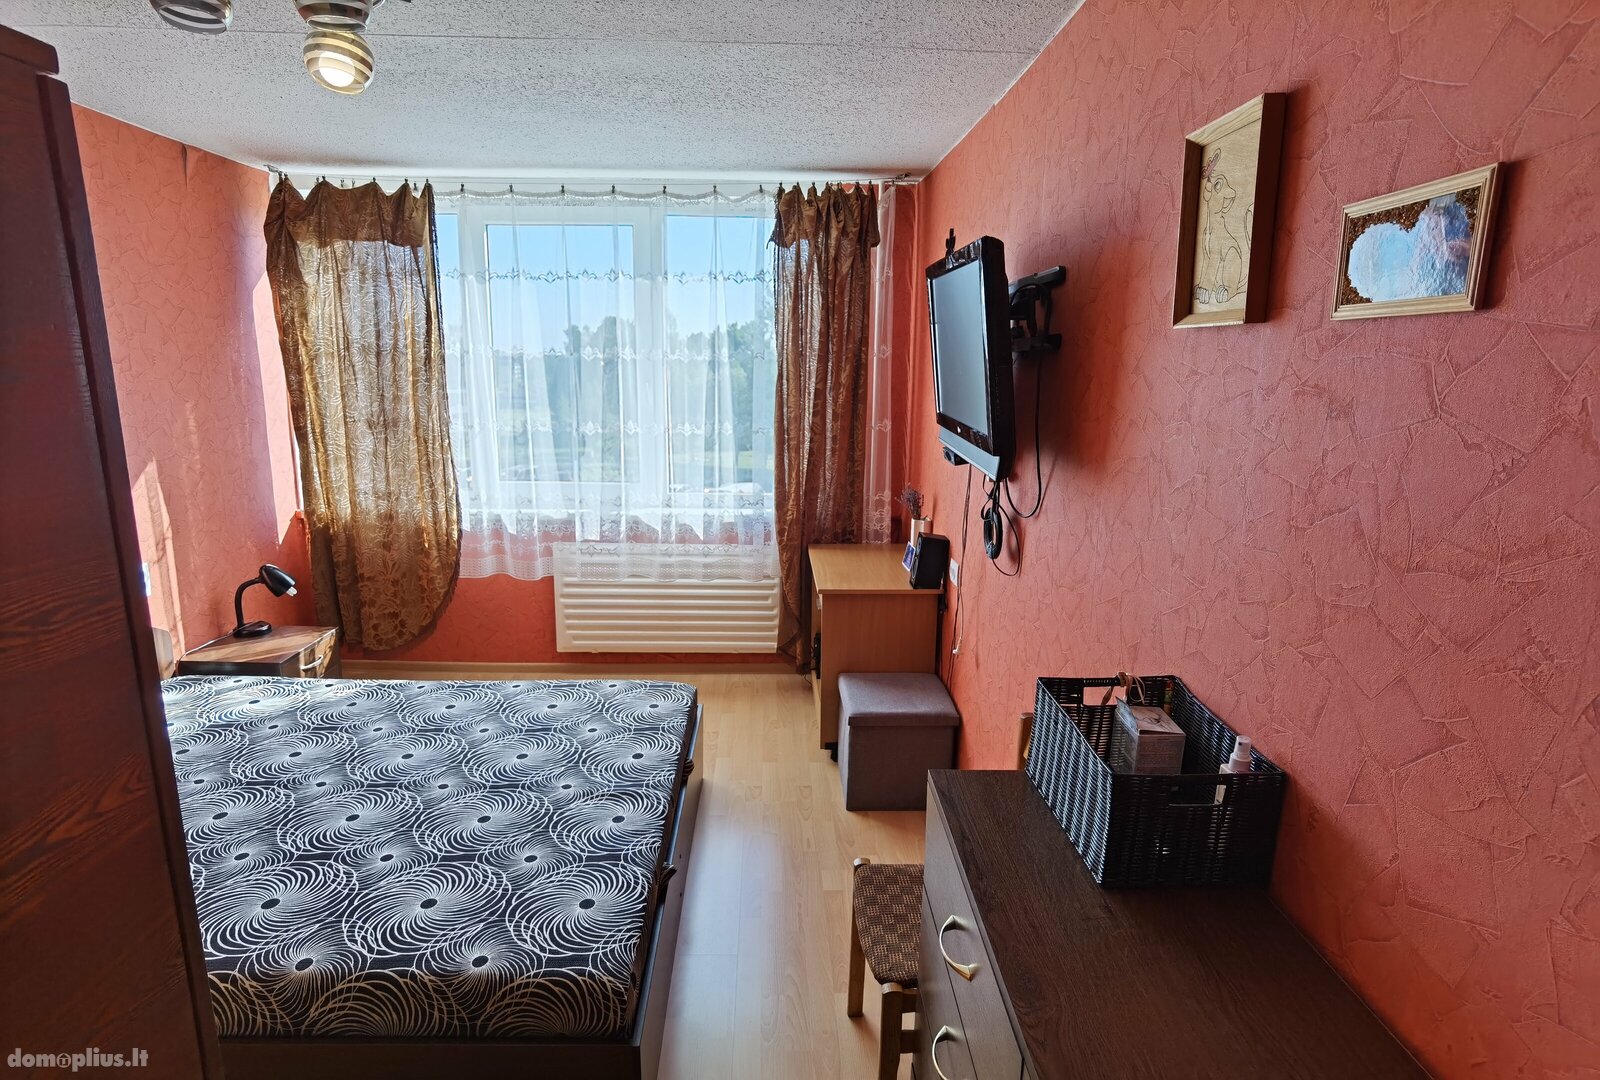 Продается 2 комнатная квартира Alytuje, Putinuose, A. Jonyno g.